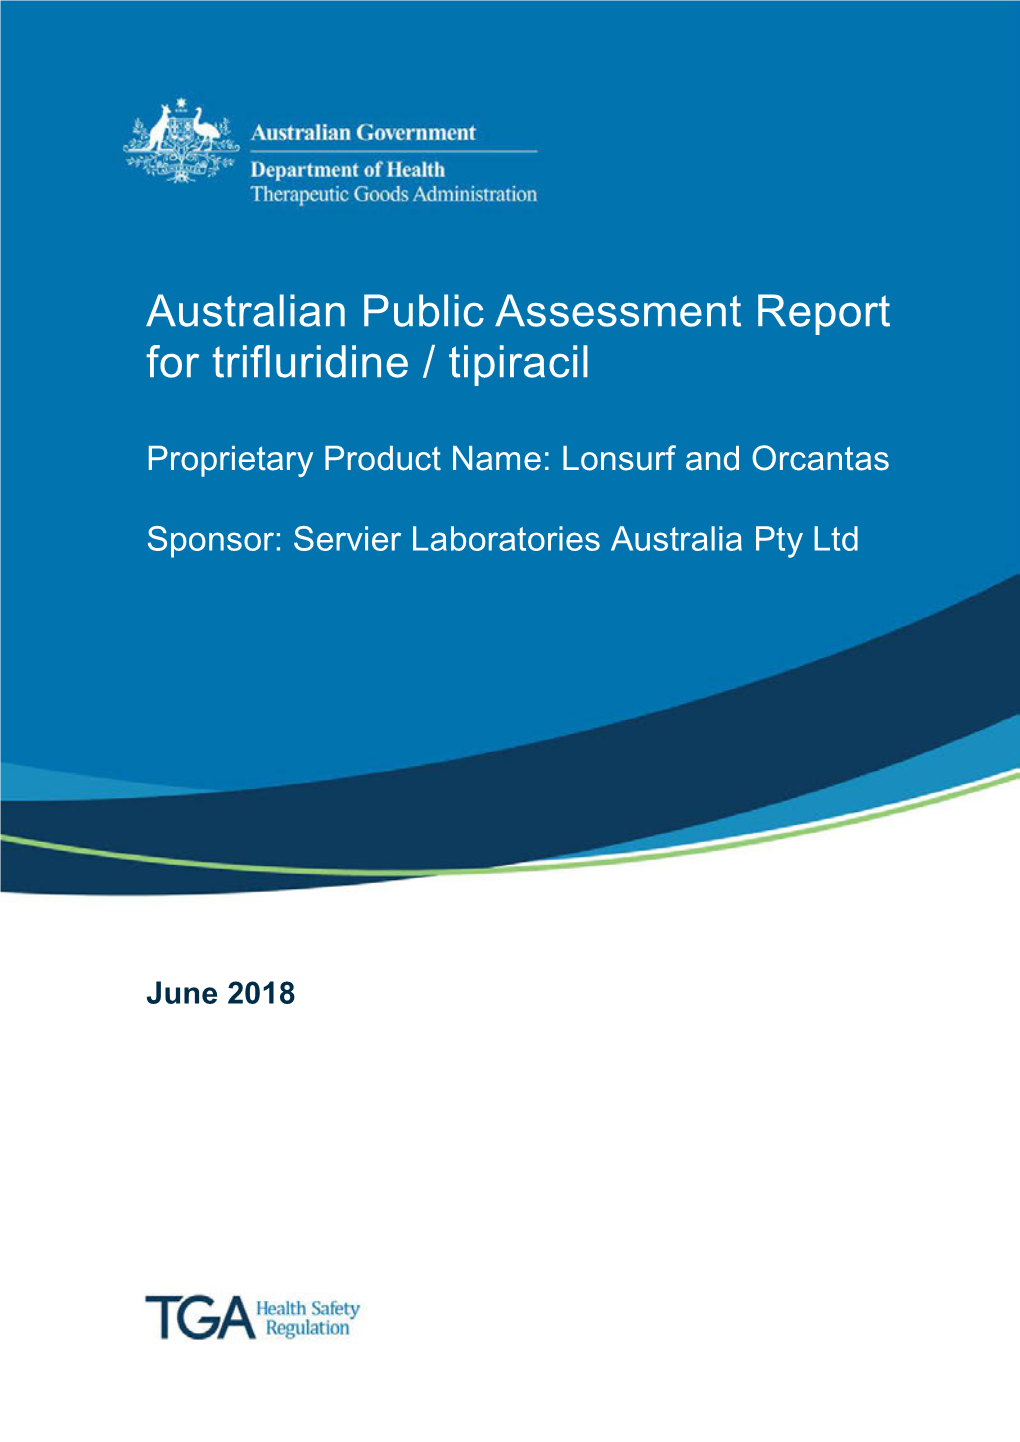 Australian Public Assessment for Trifluridine/Tipiracil [Lonsurf